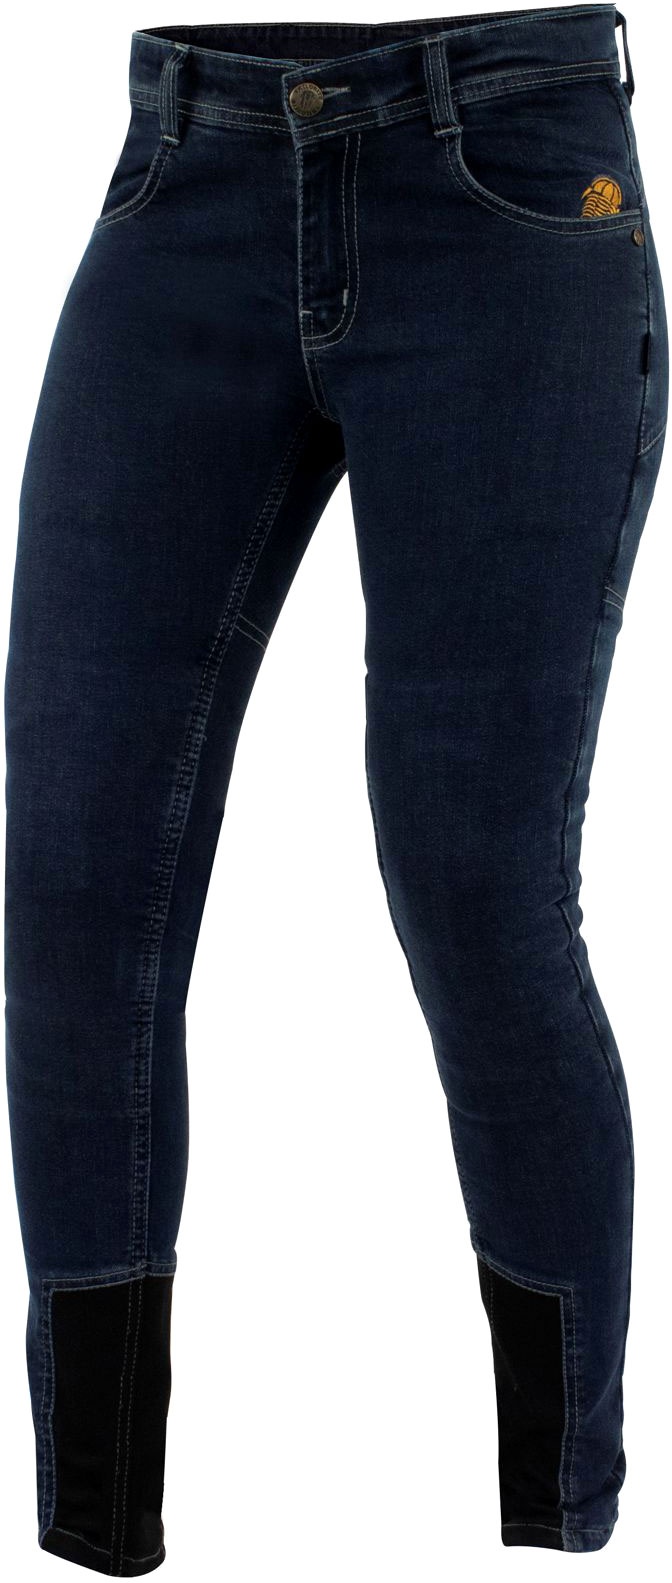 Trilobite All Shape, jeans femmes - Bleu - 28/32